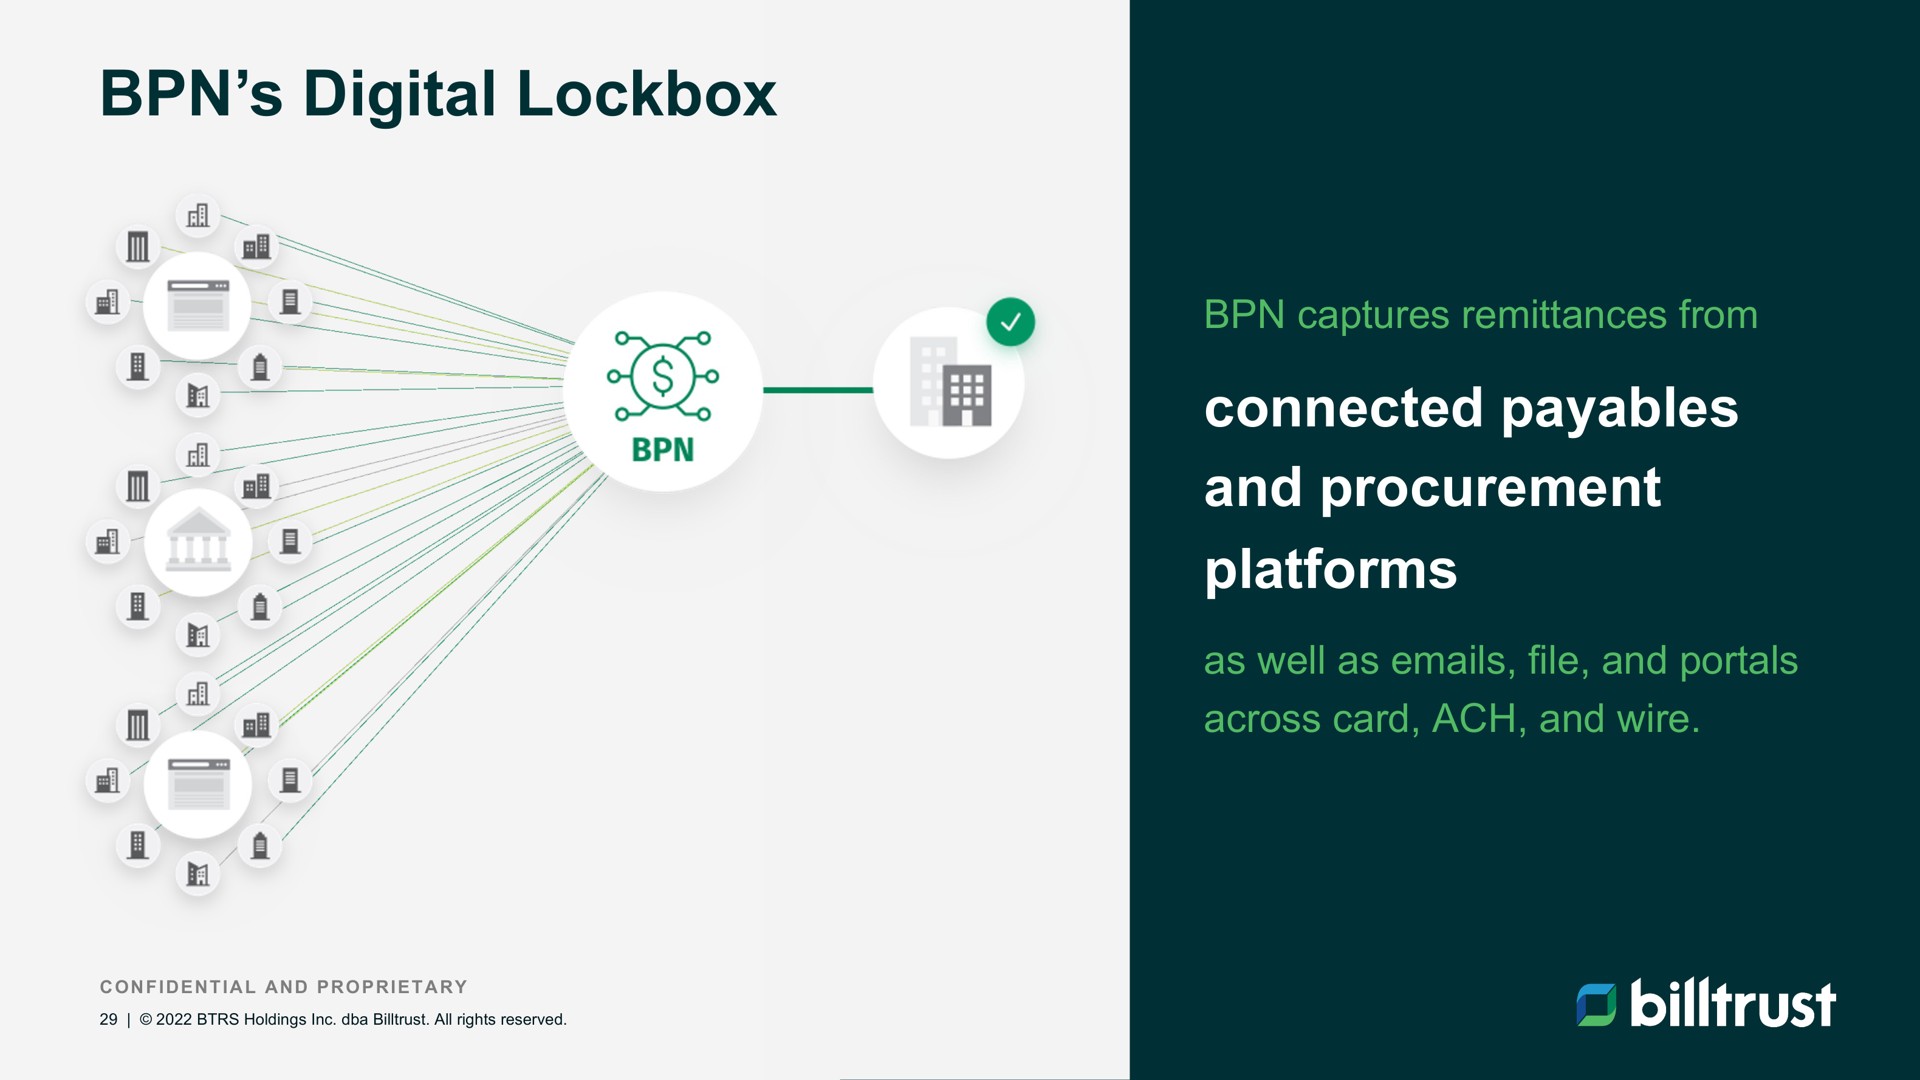 digital lockbox connected payables and procurement platforms | Billtrust